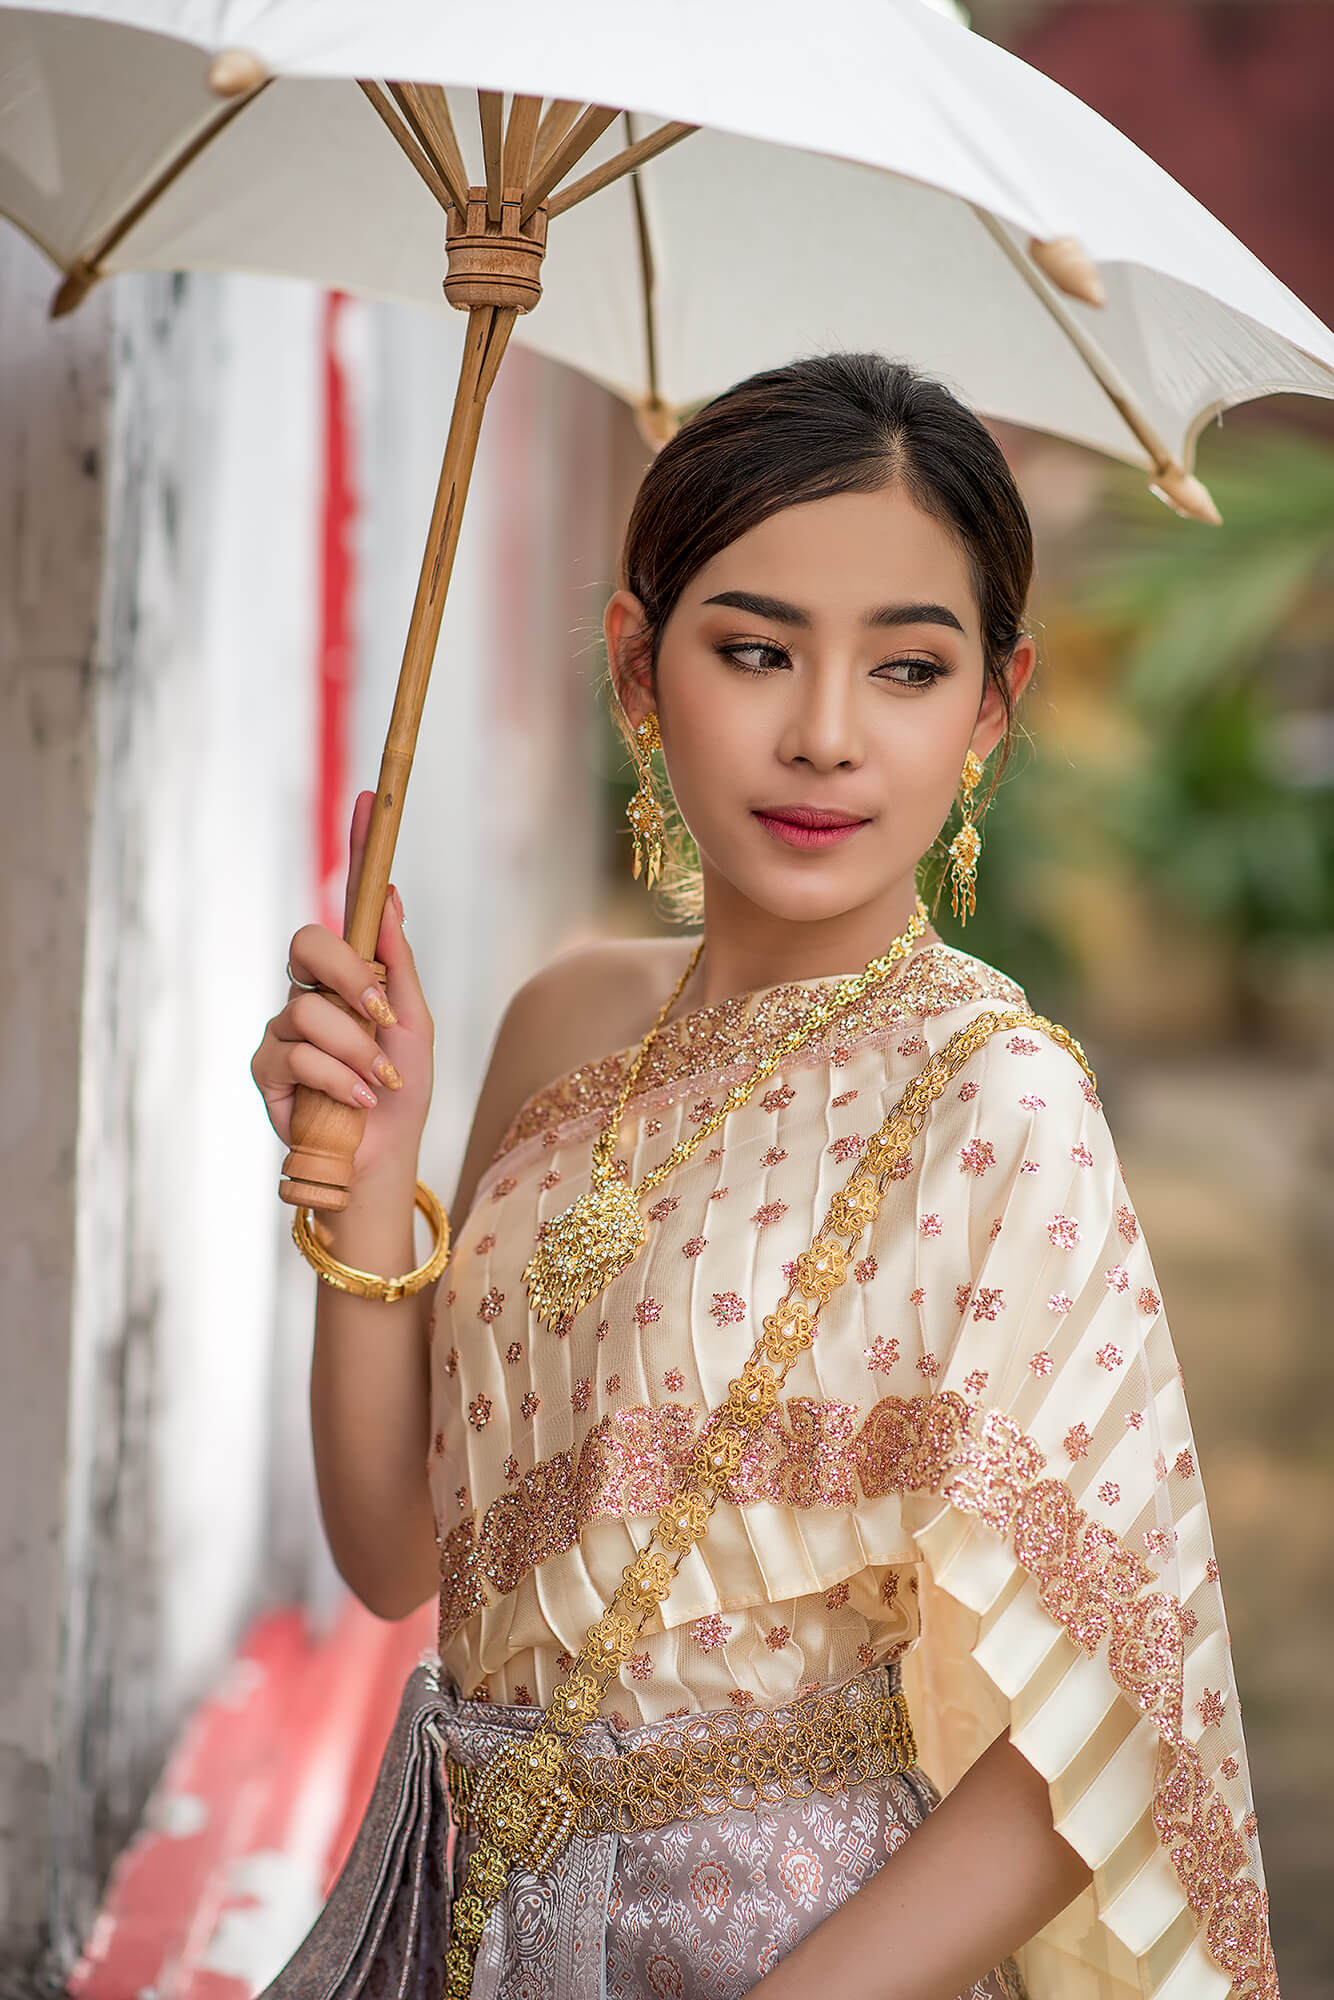 Pakaian Tradisional Thailand